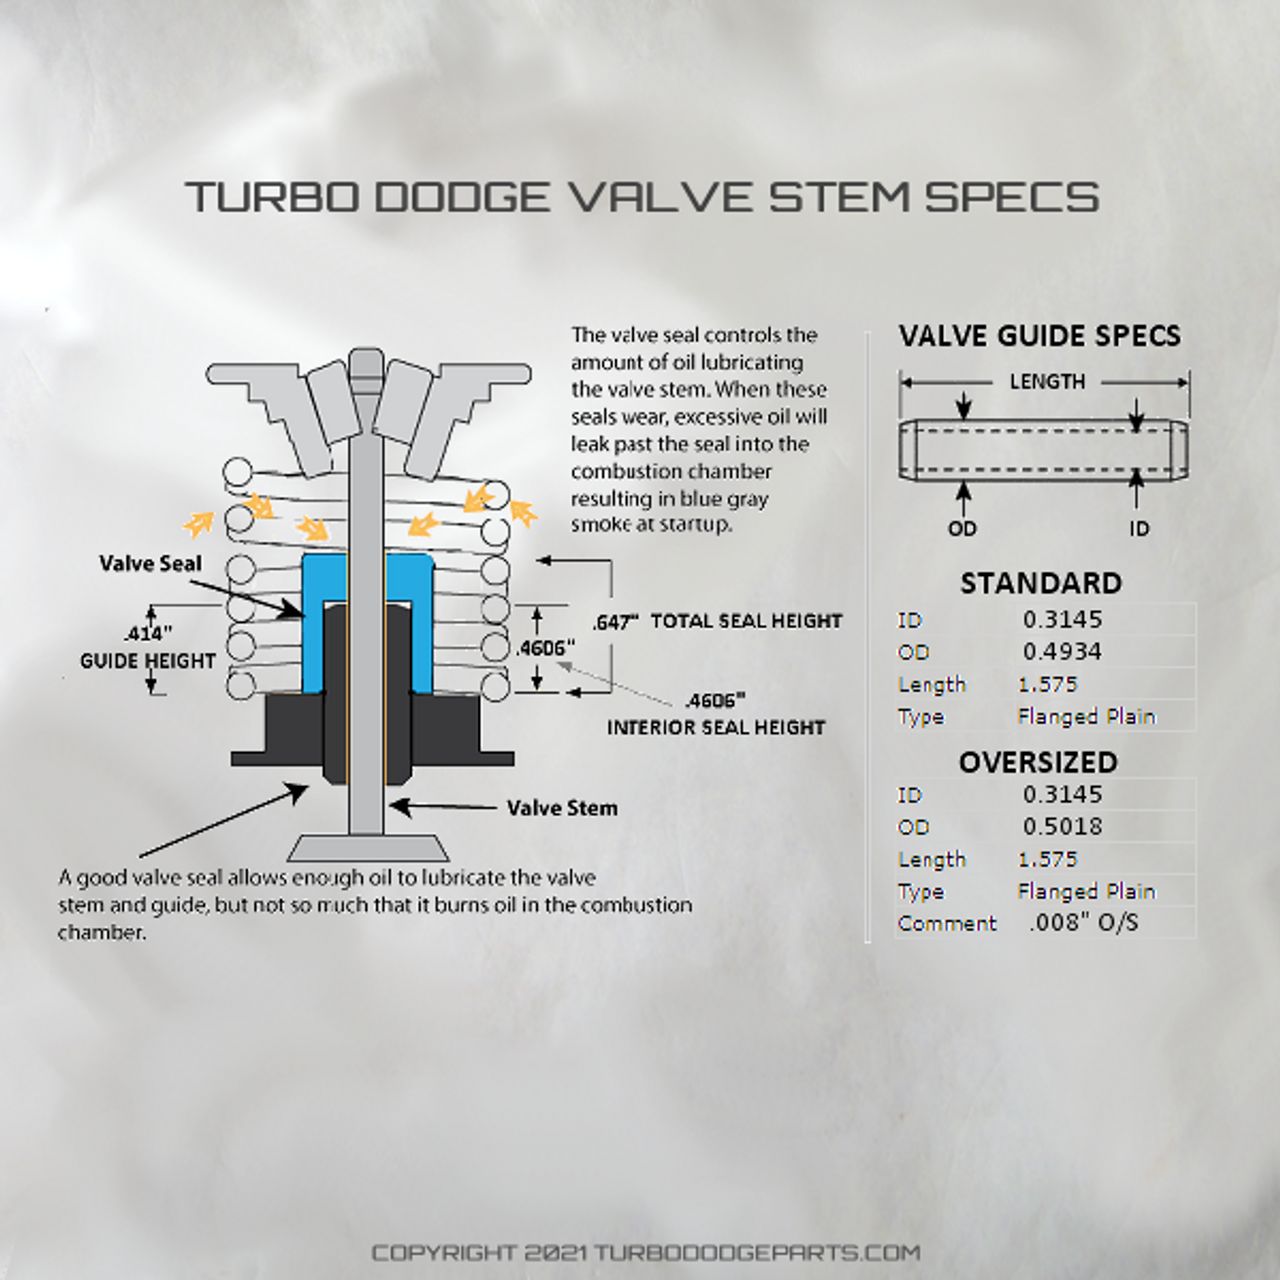 turbo Dodge parts positive clad valve stem seal